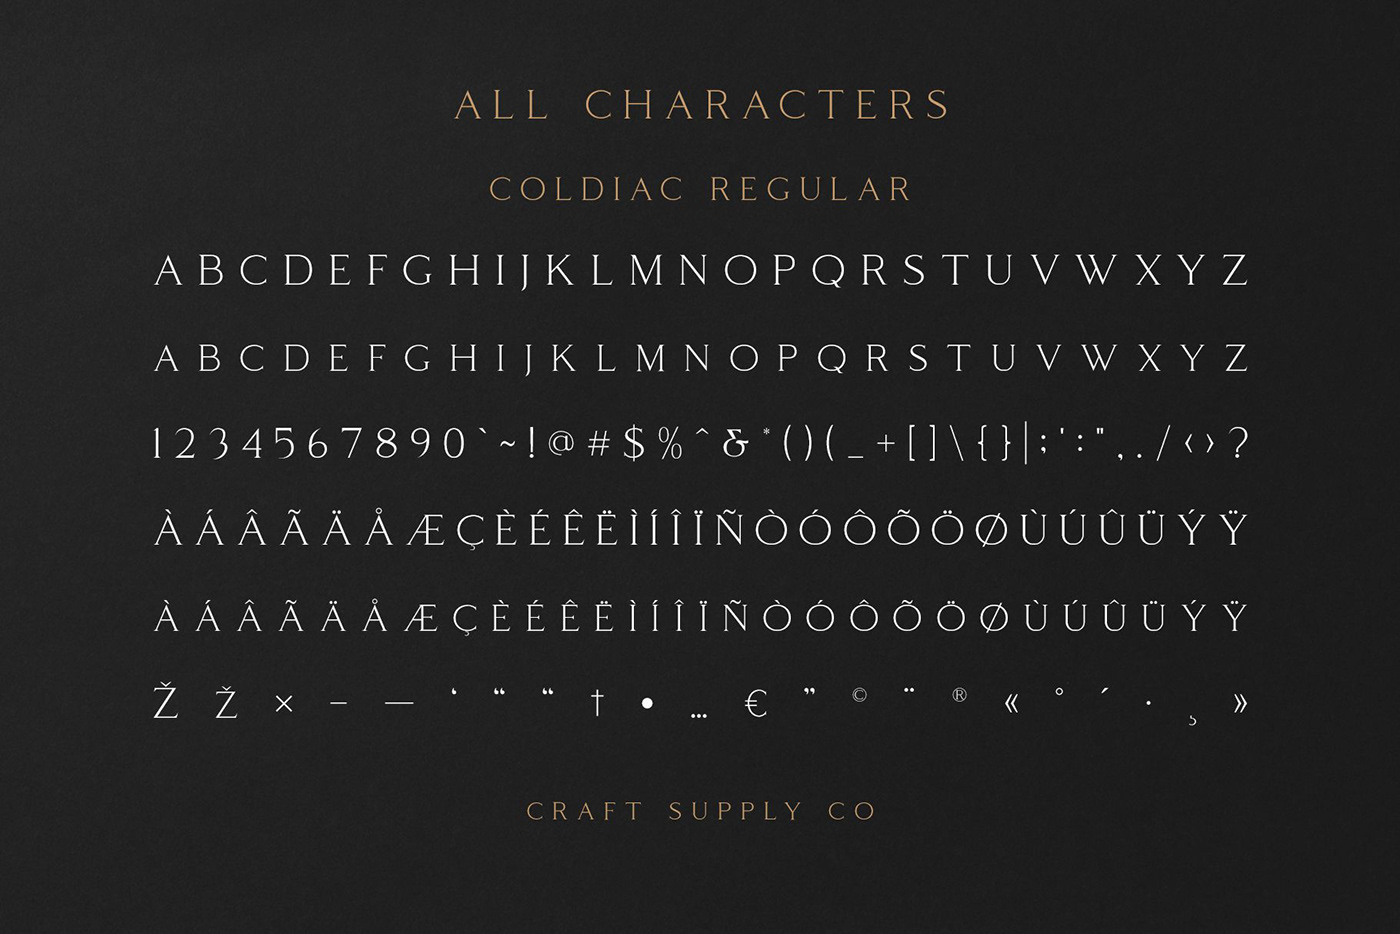 Free font download freebies luxury serif clean elegant free Typeface classy